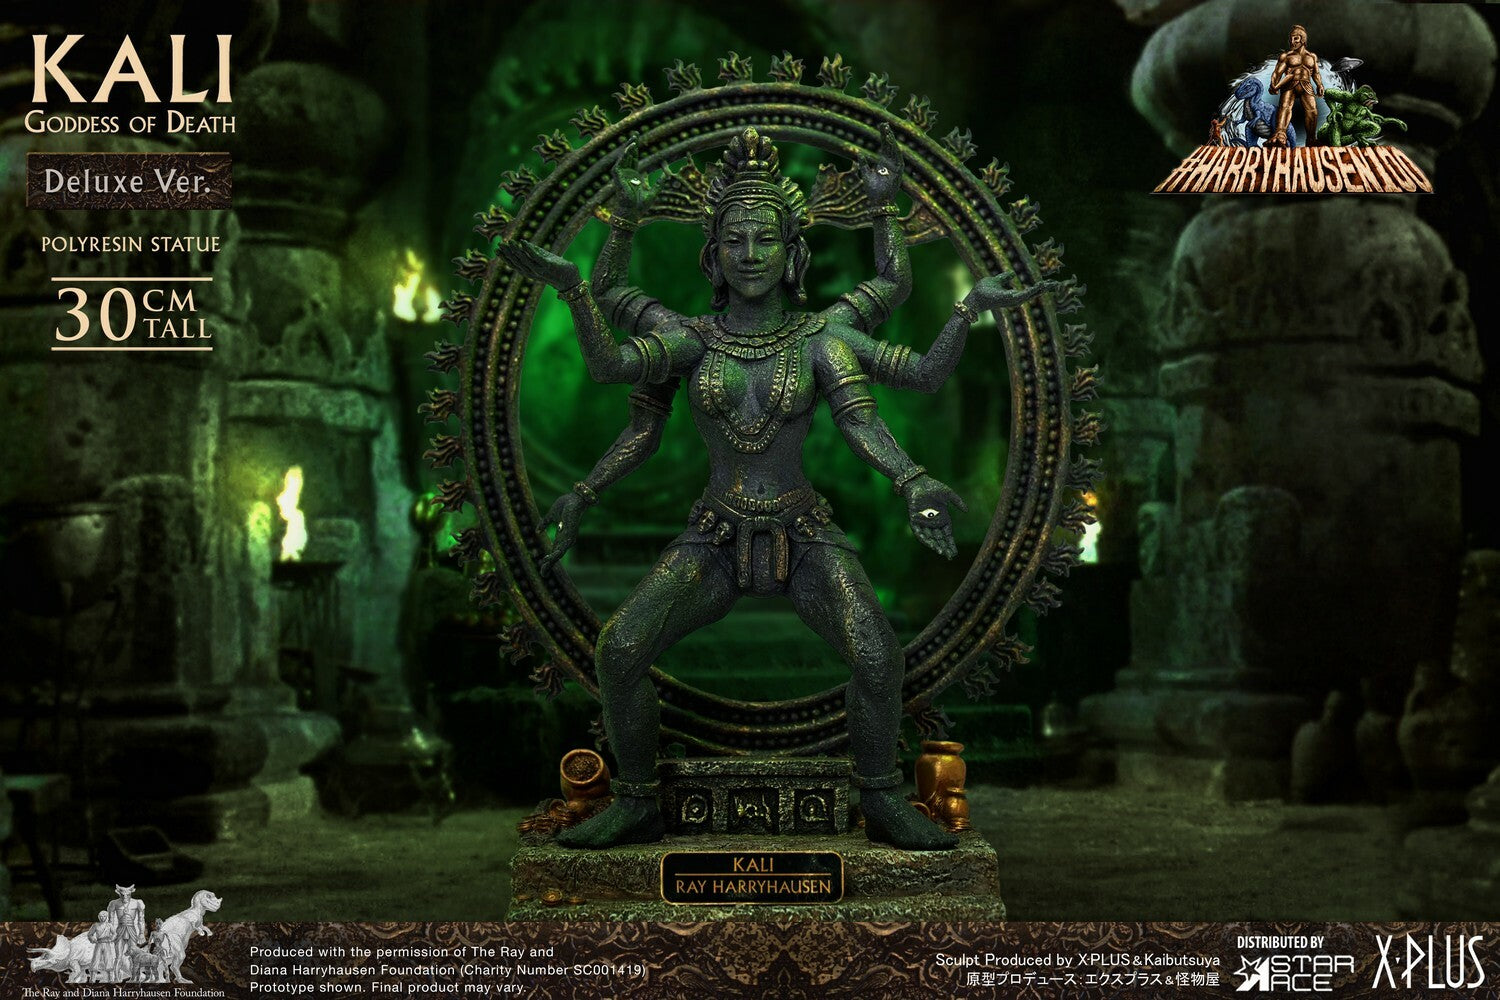  Ray Harryhausen: Kali Goddess of Death 2.0 Deluxe Version Statue  4897057889667